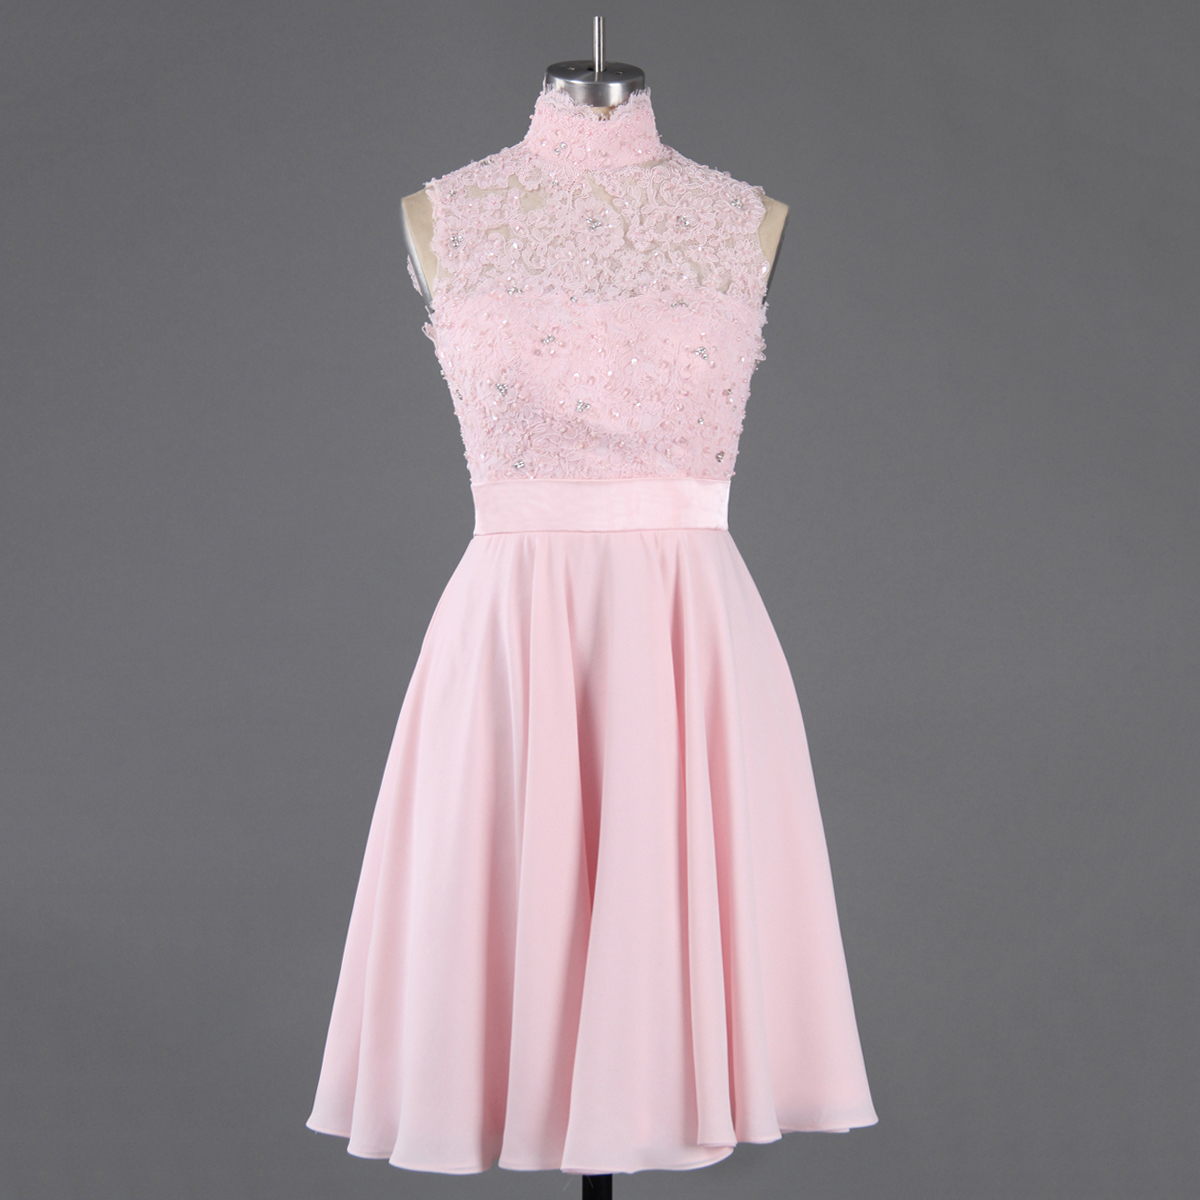 Pink High Neck Lace Applique And Beaded Chiffon A-line Short Cocktail Dress, Graduation Dress, Evening Dress, Homecoming Dress